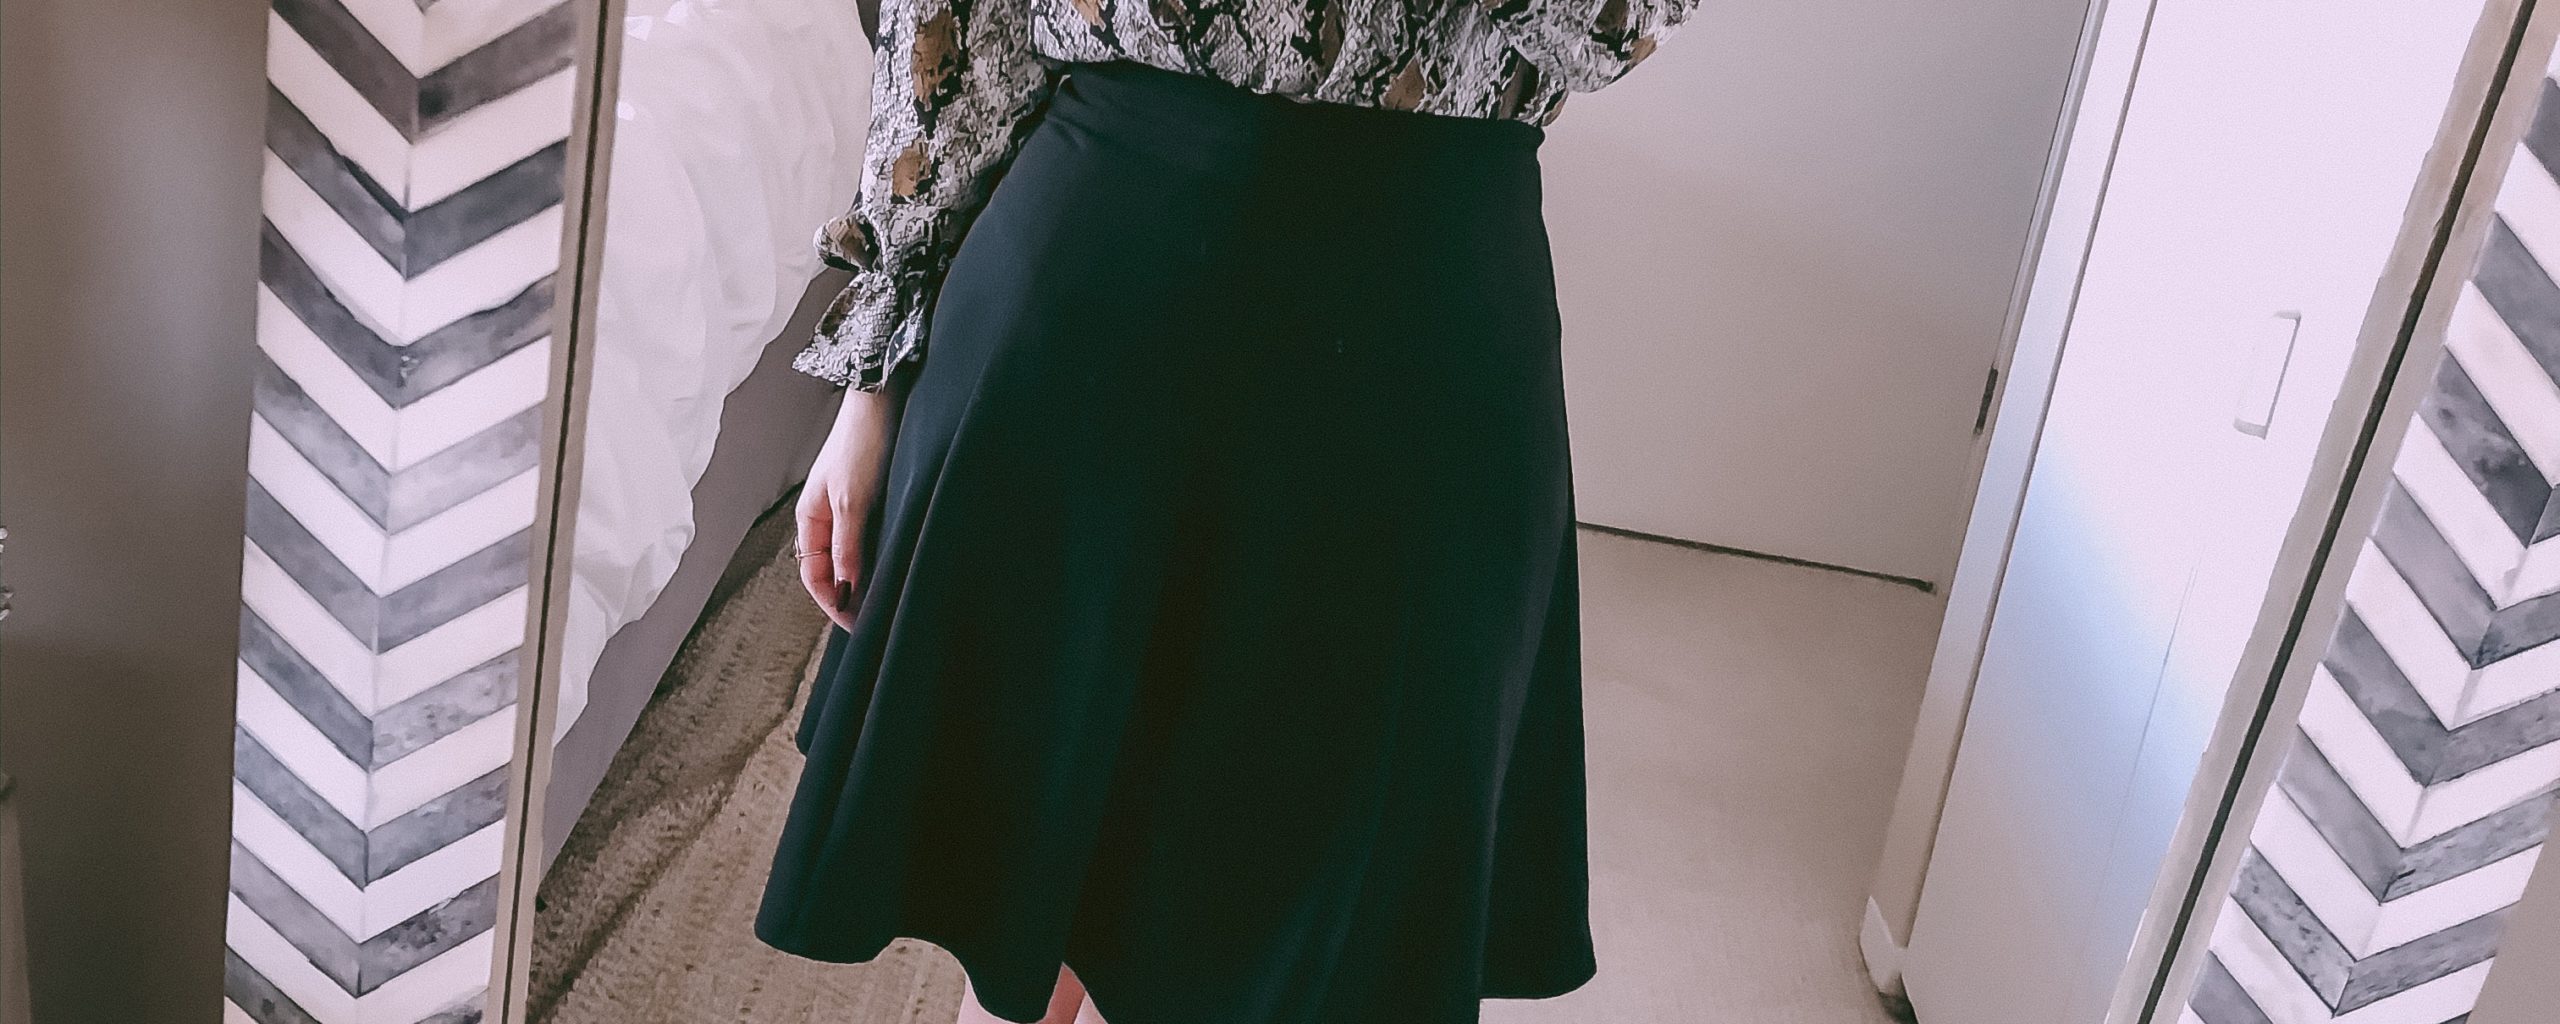 snakeskin print top and aline skirt